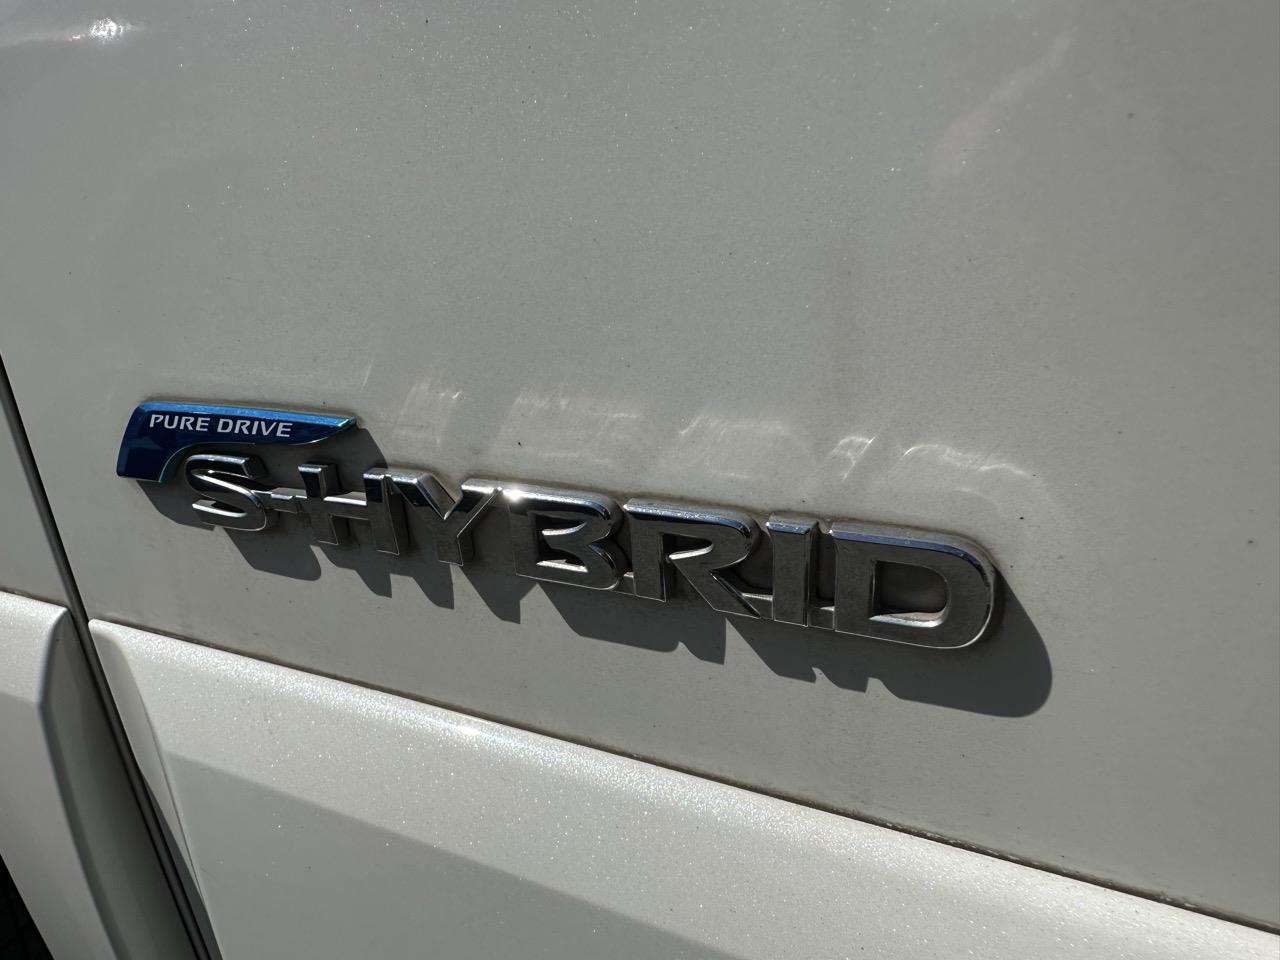 2013 Nissan Serena HIGHWAY STAR S-Hybrid V AERO MODE image 16